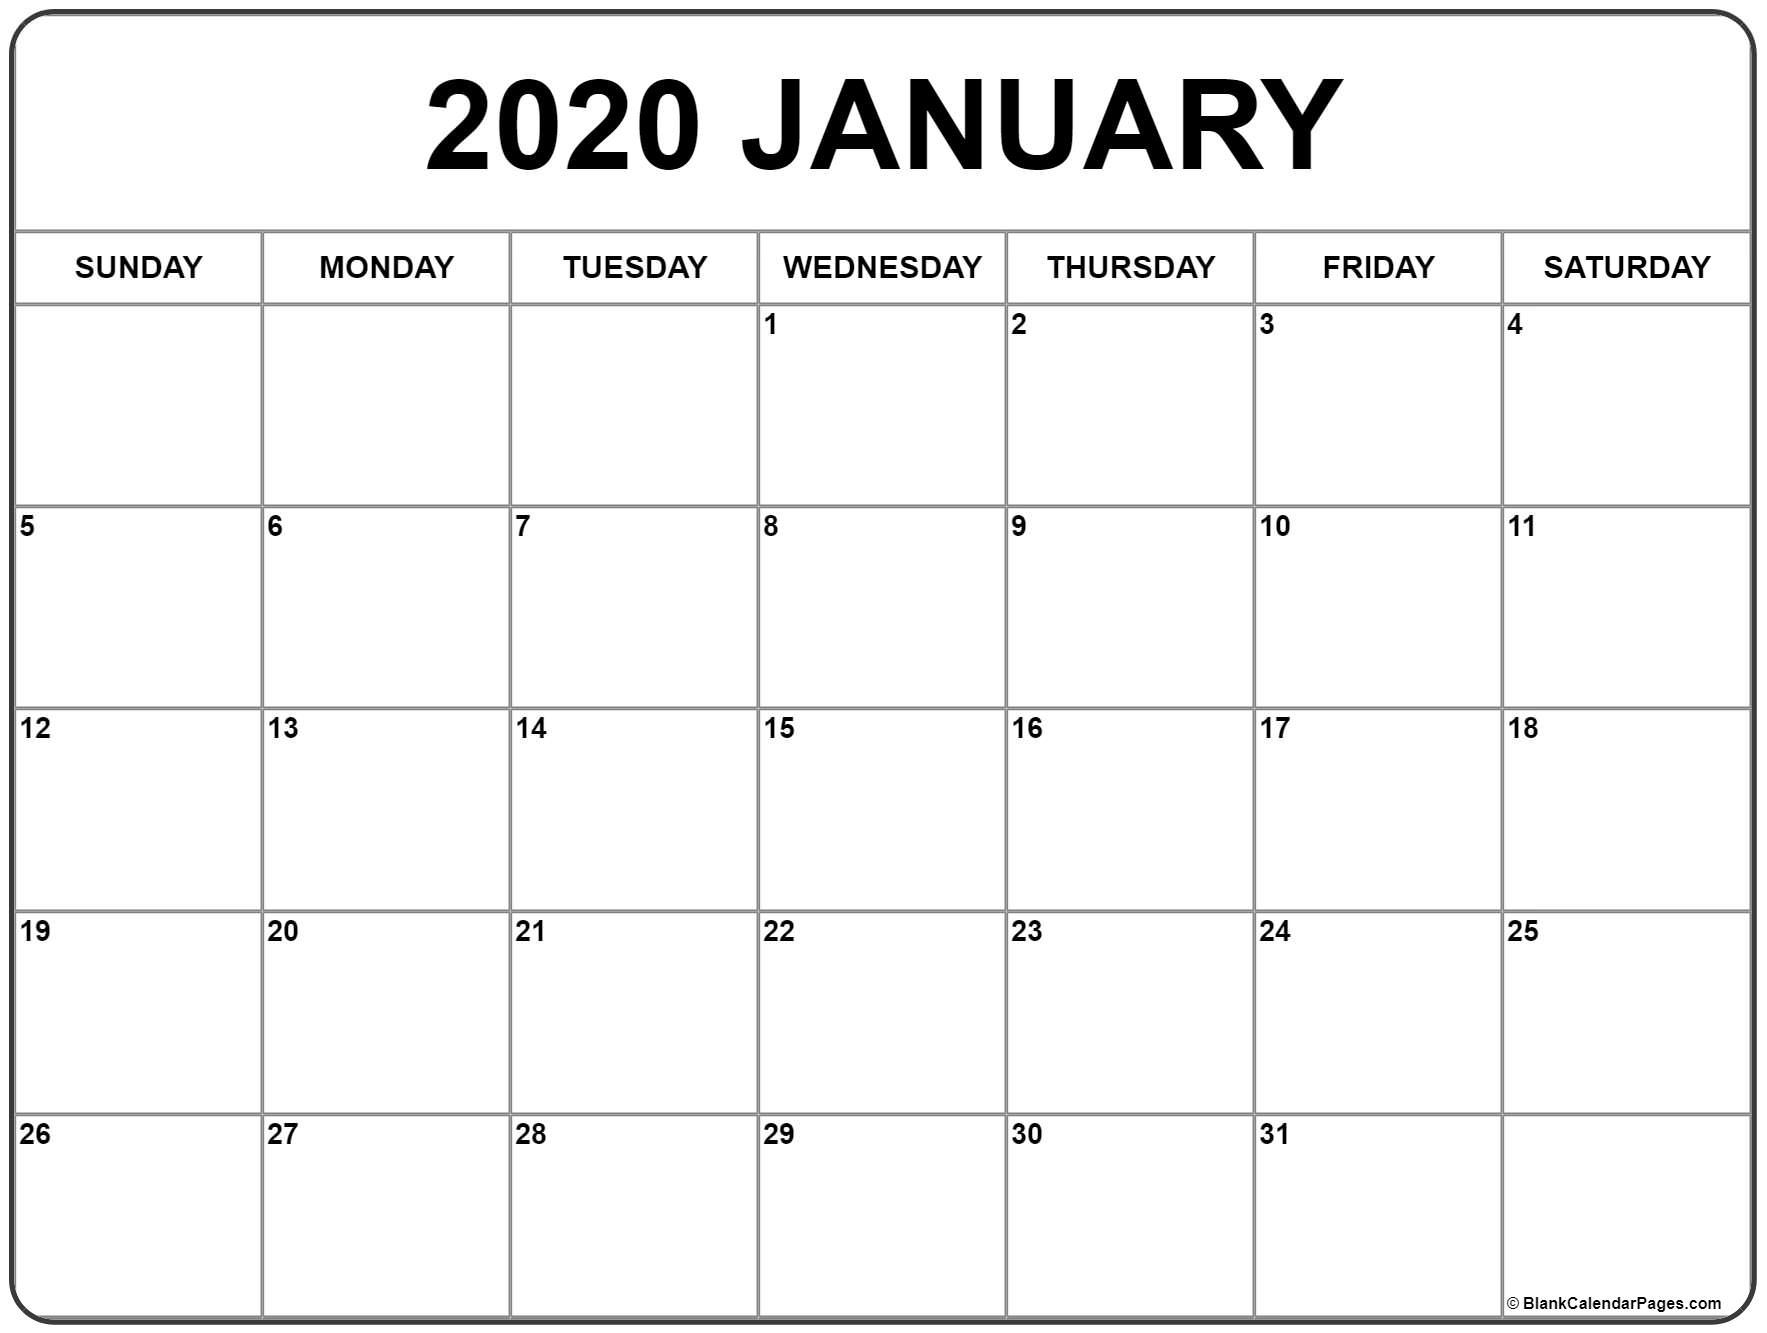 January 2020 Calendar | Free Printable Monthly Calendars inside Blank Calendar 2020 Printable Monthly